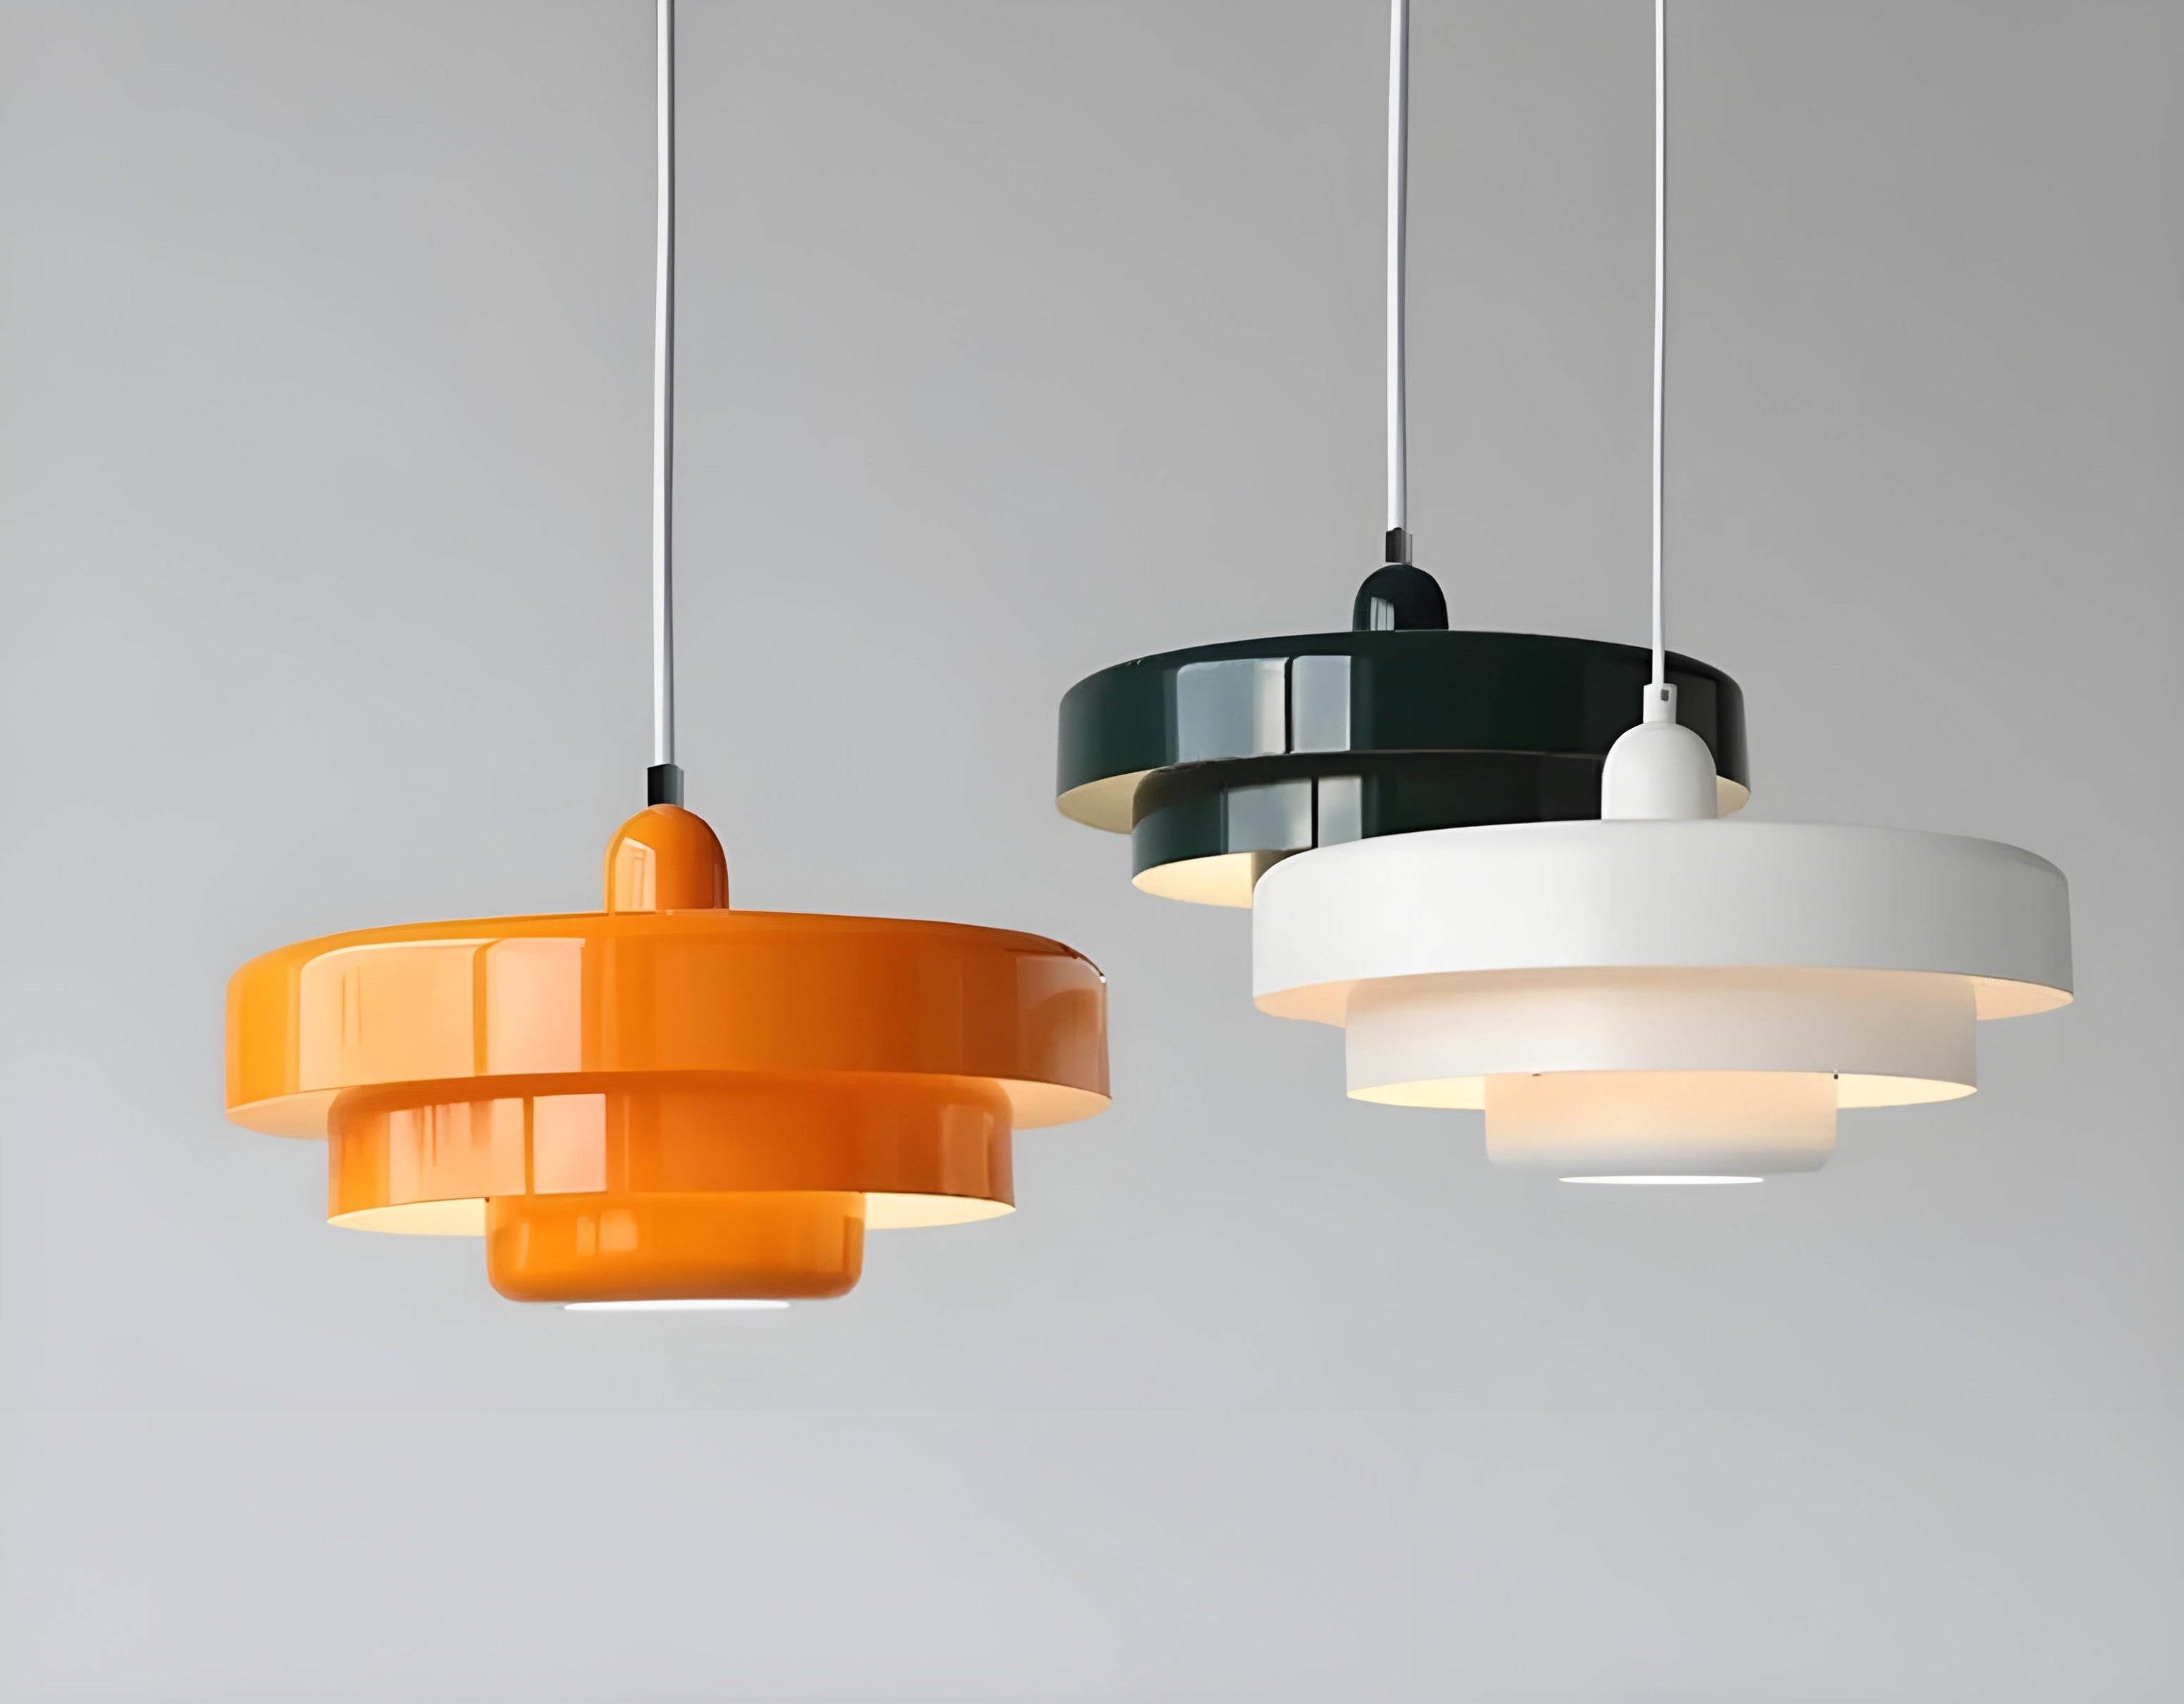 Modern Droplights | Colored Hanging Lamps For Bedroom Living Room Kitchen Restaurants - Pendant